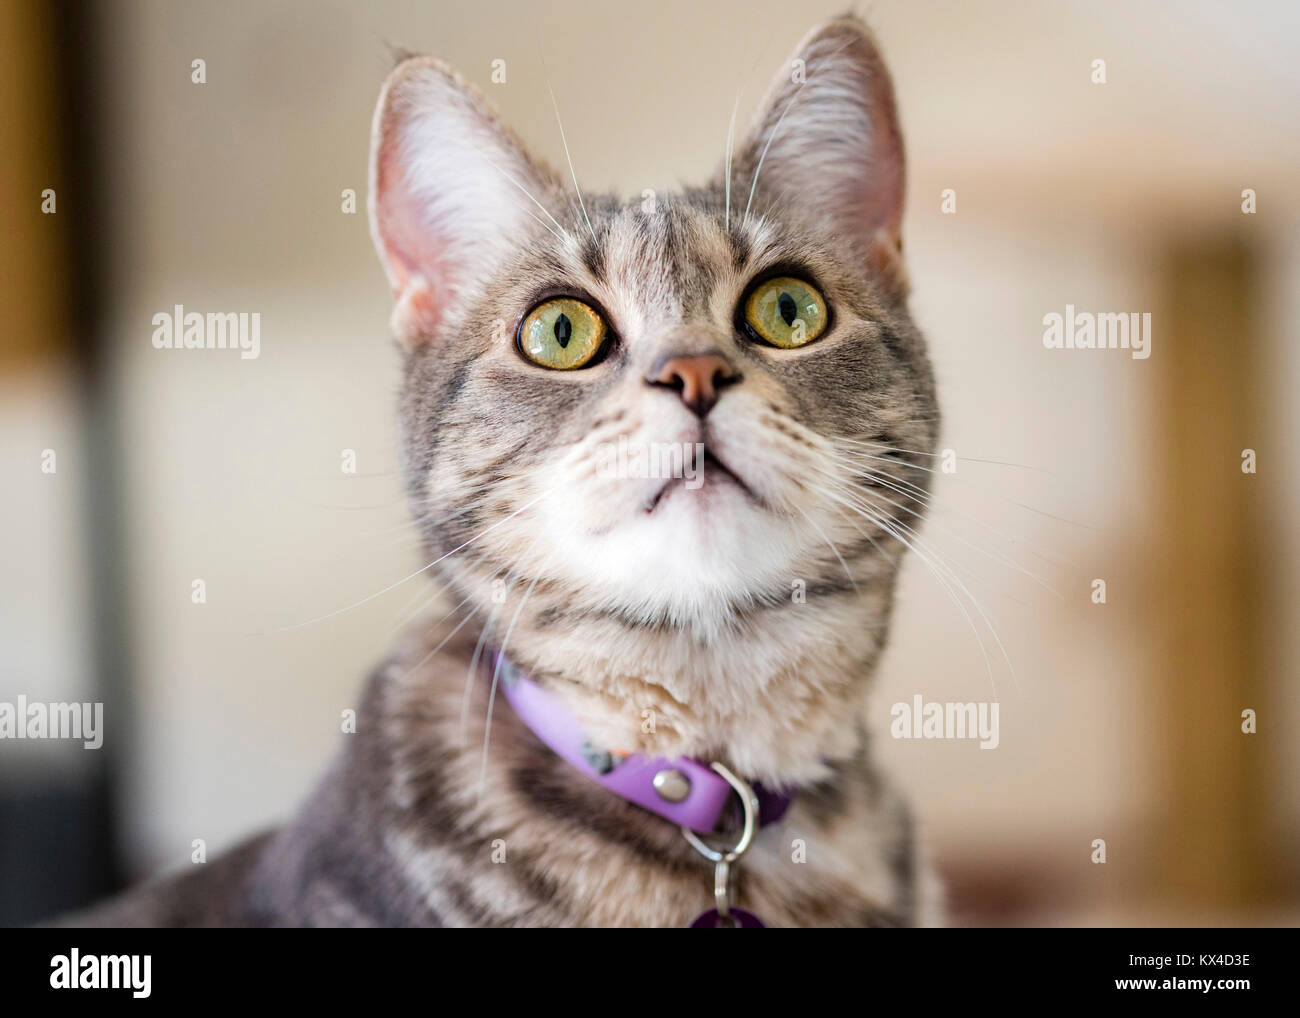 Grau gestreifte Katze Nahaufnahme portrait. Grau tabby Katze mit grünen Augen sieht auf. Stockfoto